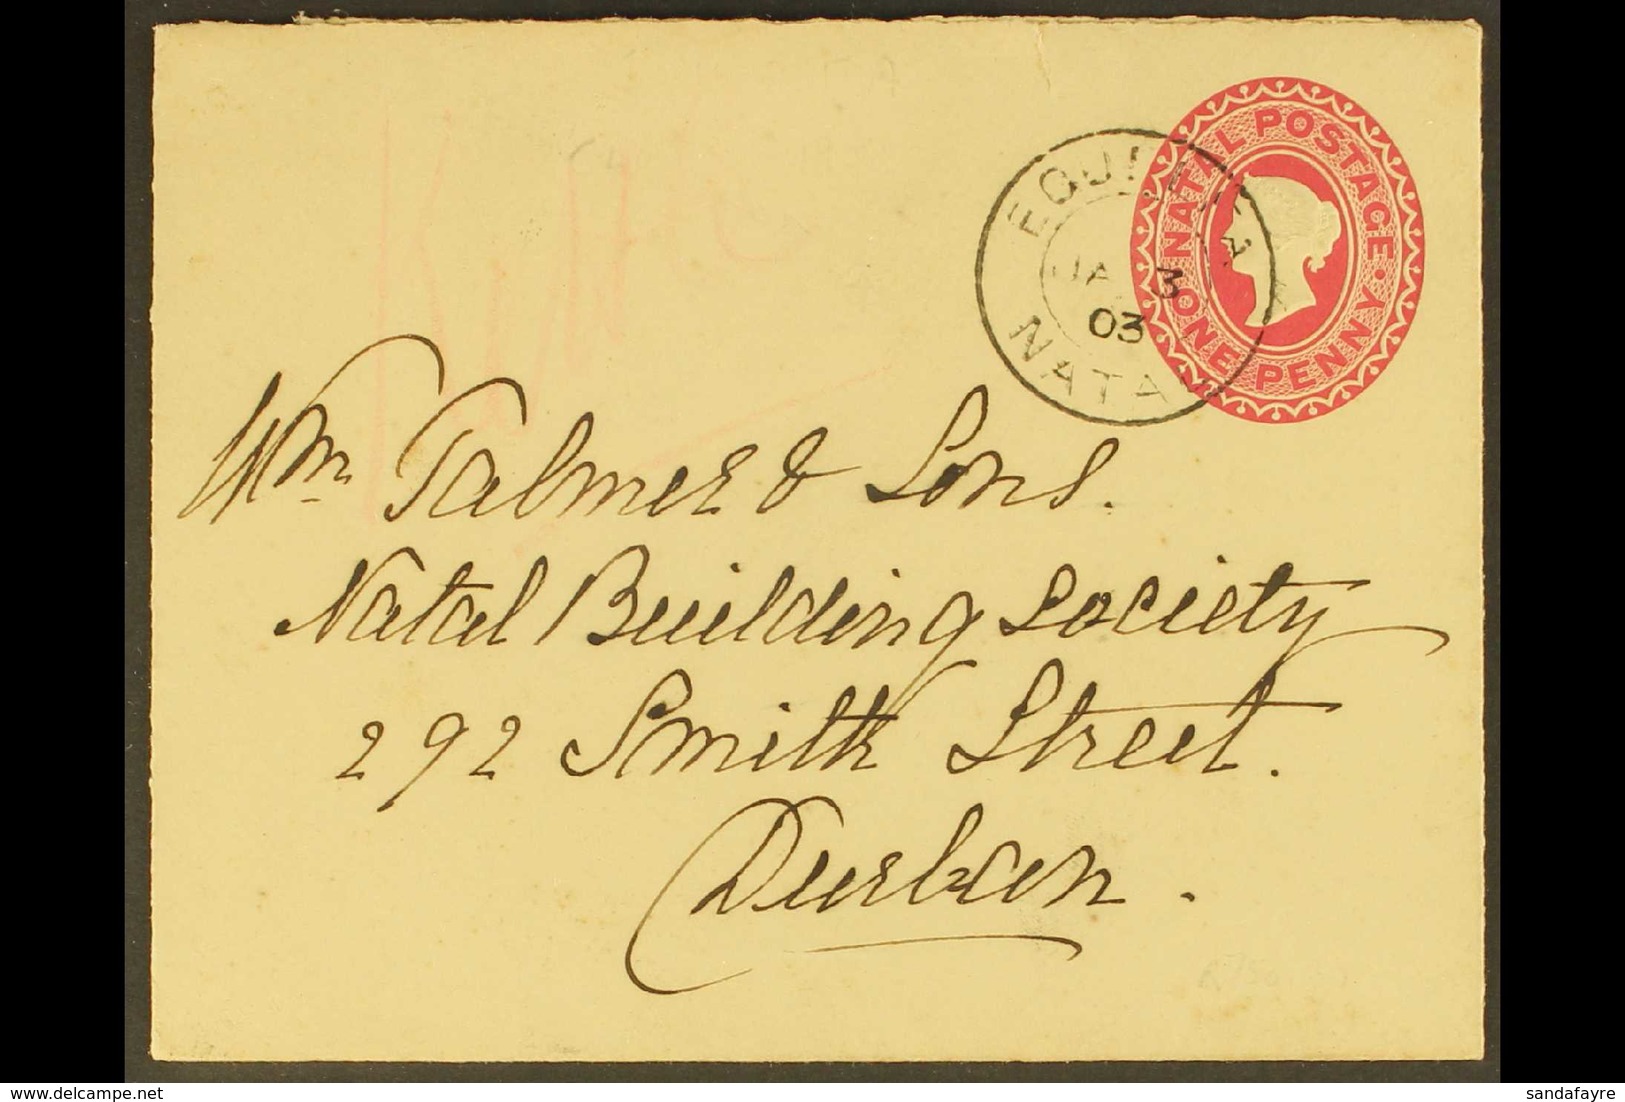 NATAL 1903 (Jan 3rd) 1d Postal Stationery Envelope To Durban Bearing A Seldom Seen "EQUEEFA" Cds, Umzinto Transit Mark & - Ohne Zuordnung